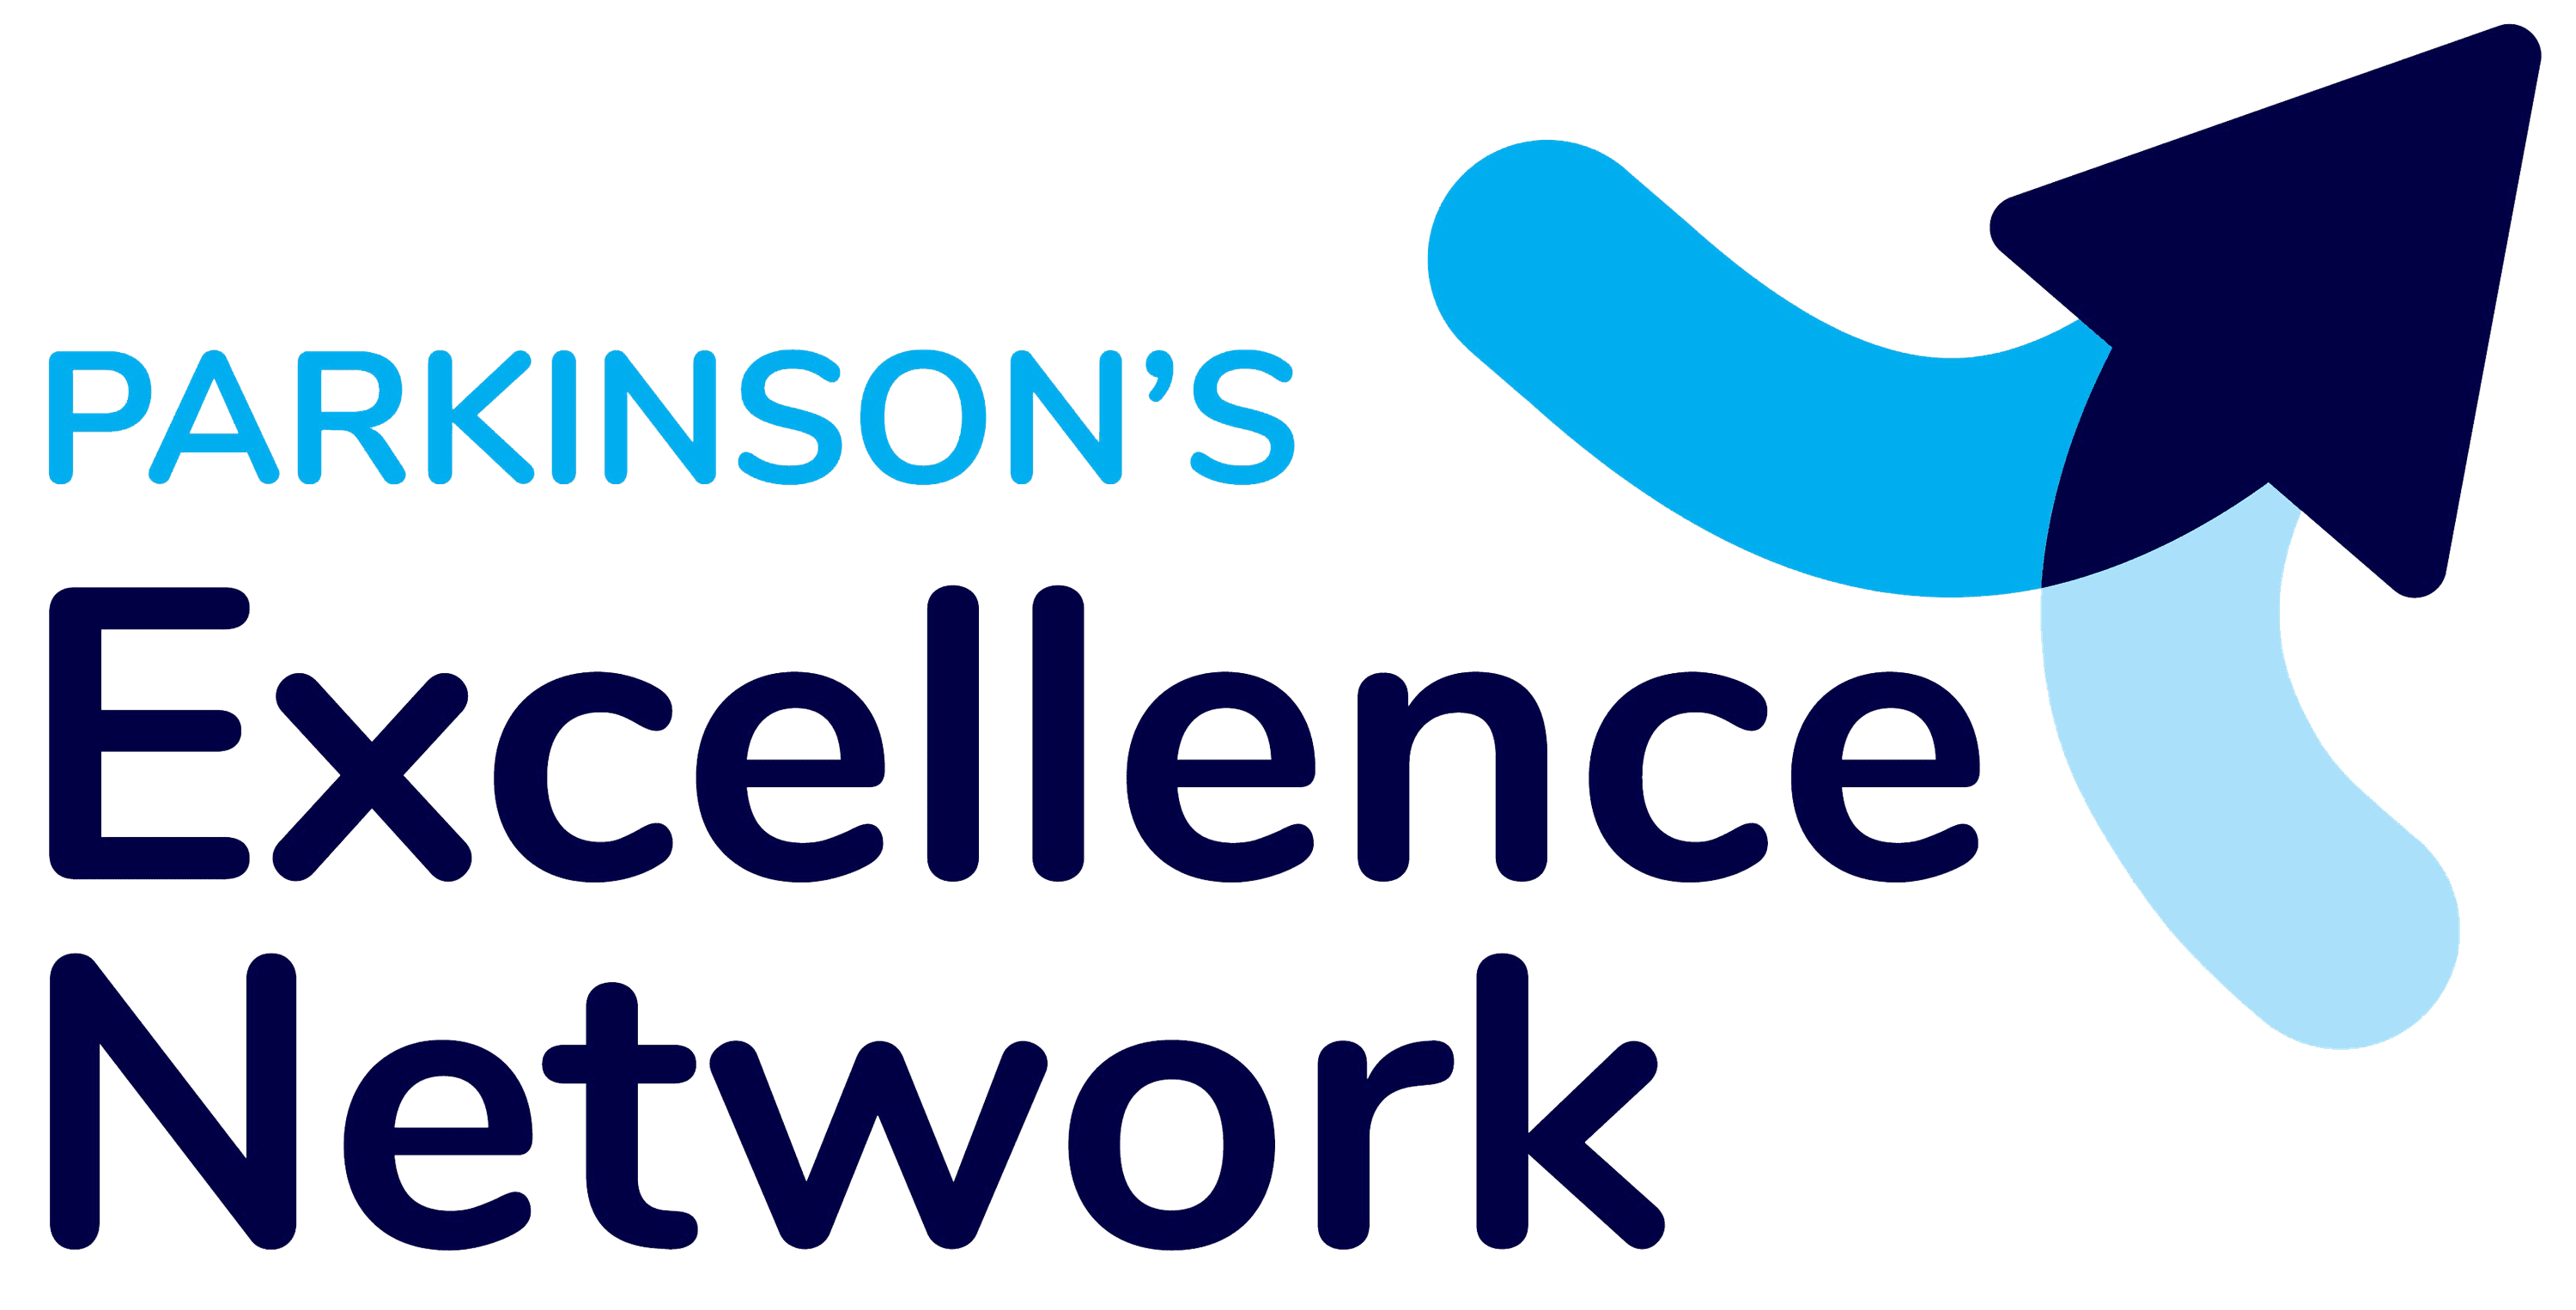 UK Parkinson's Excellence Network logo